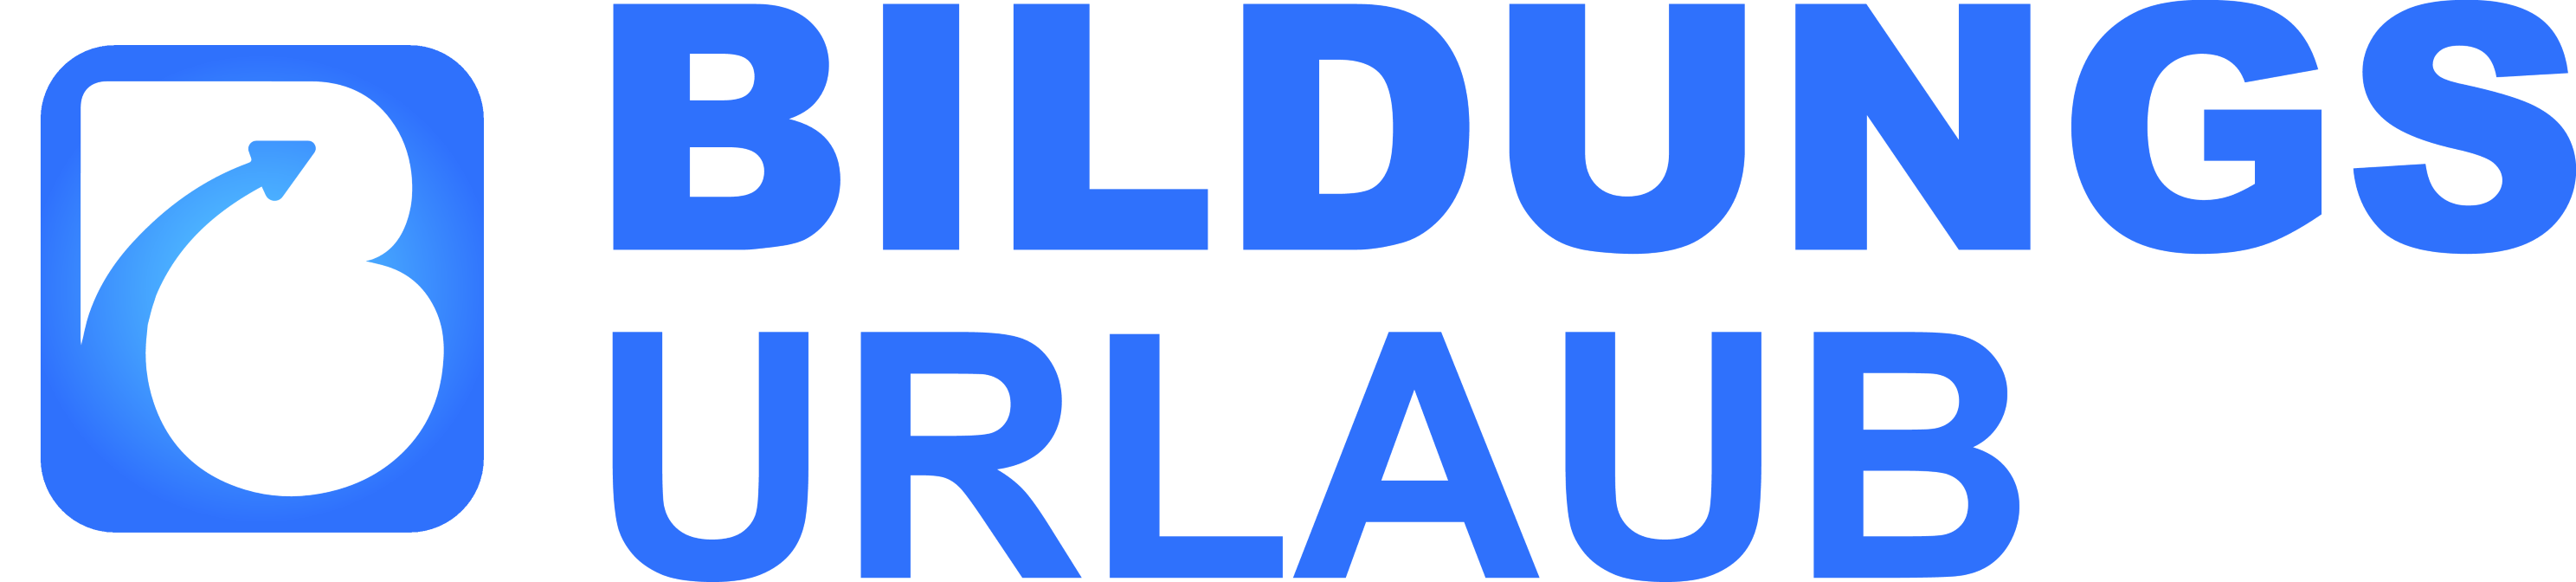 Bildungsurlaub Logo